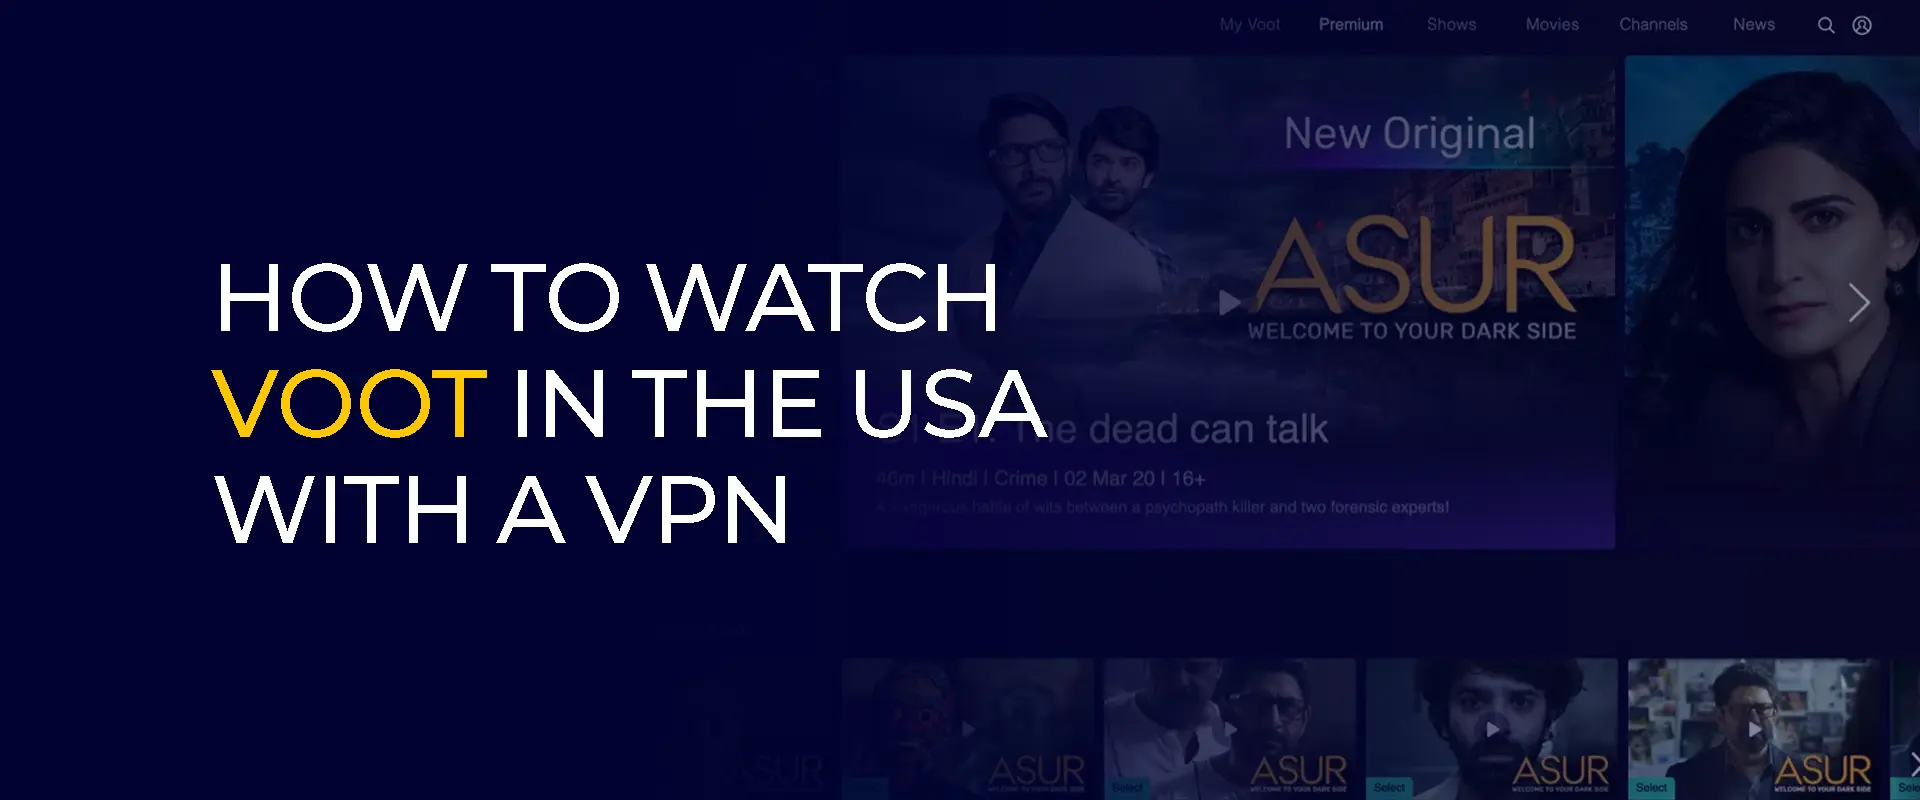 VPN を使用して米国で Voot を視聴する方法